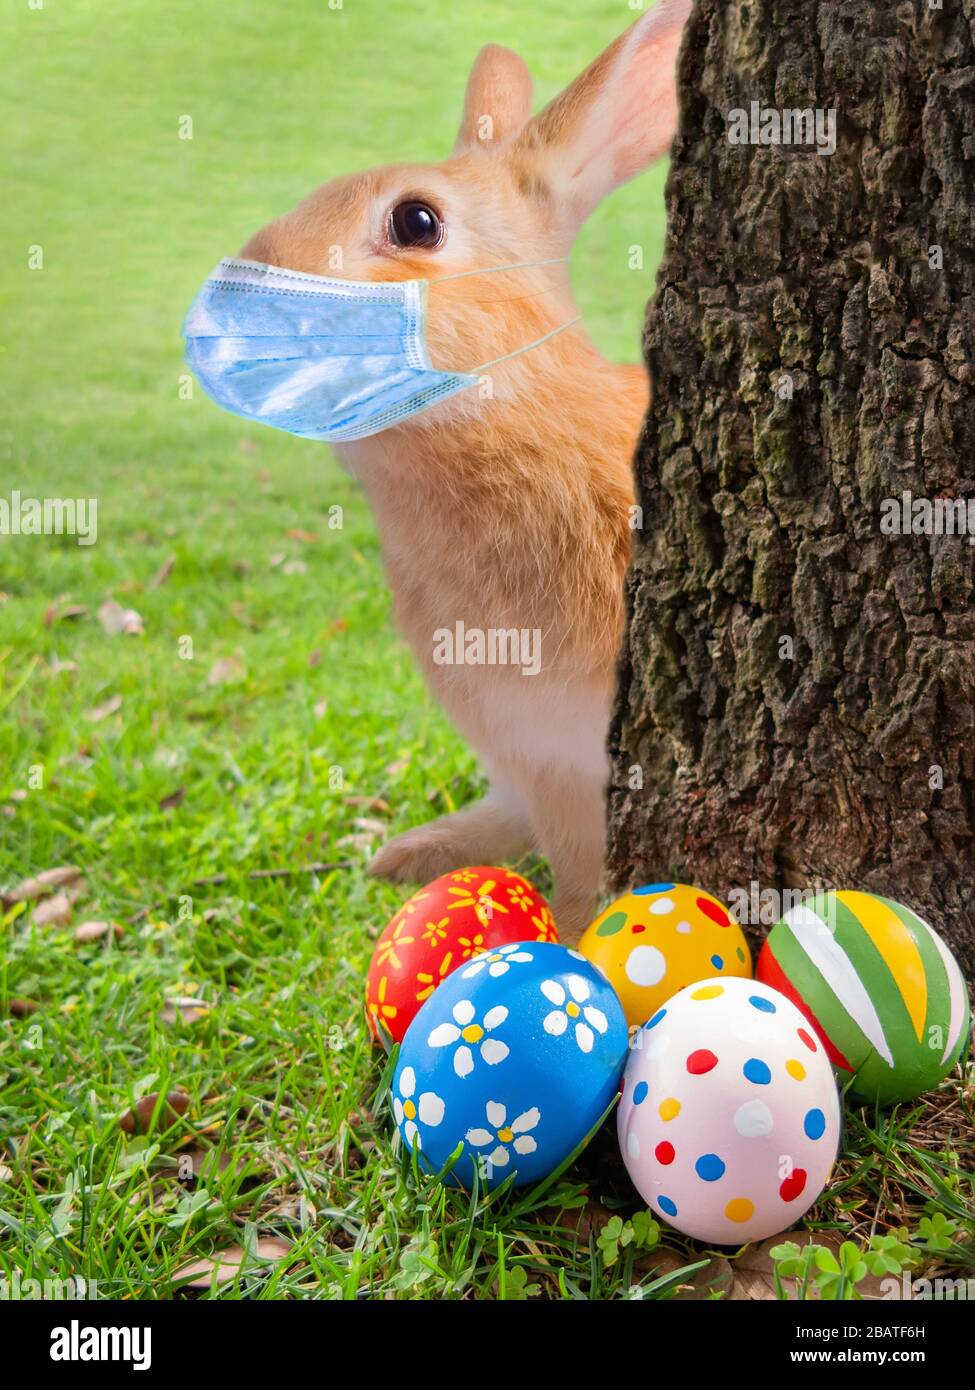 scared-easter-bunny-or-easter-rabbit-peeking-tree-coronavirus-covid-19-pandemic-surgical-face-mask-painted-easter-eggs-hidden-grass-egg-hunt-game-2BATF6H.jpg